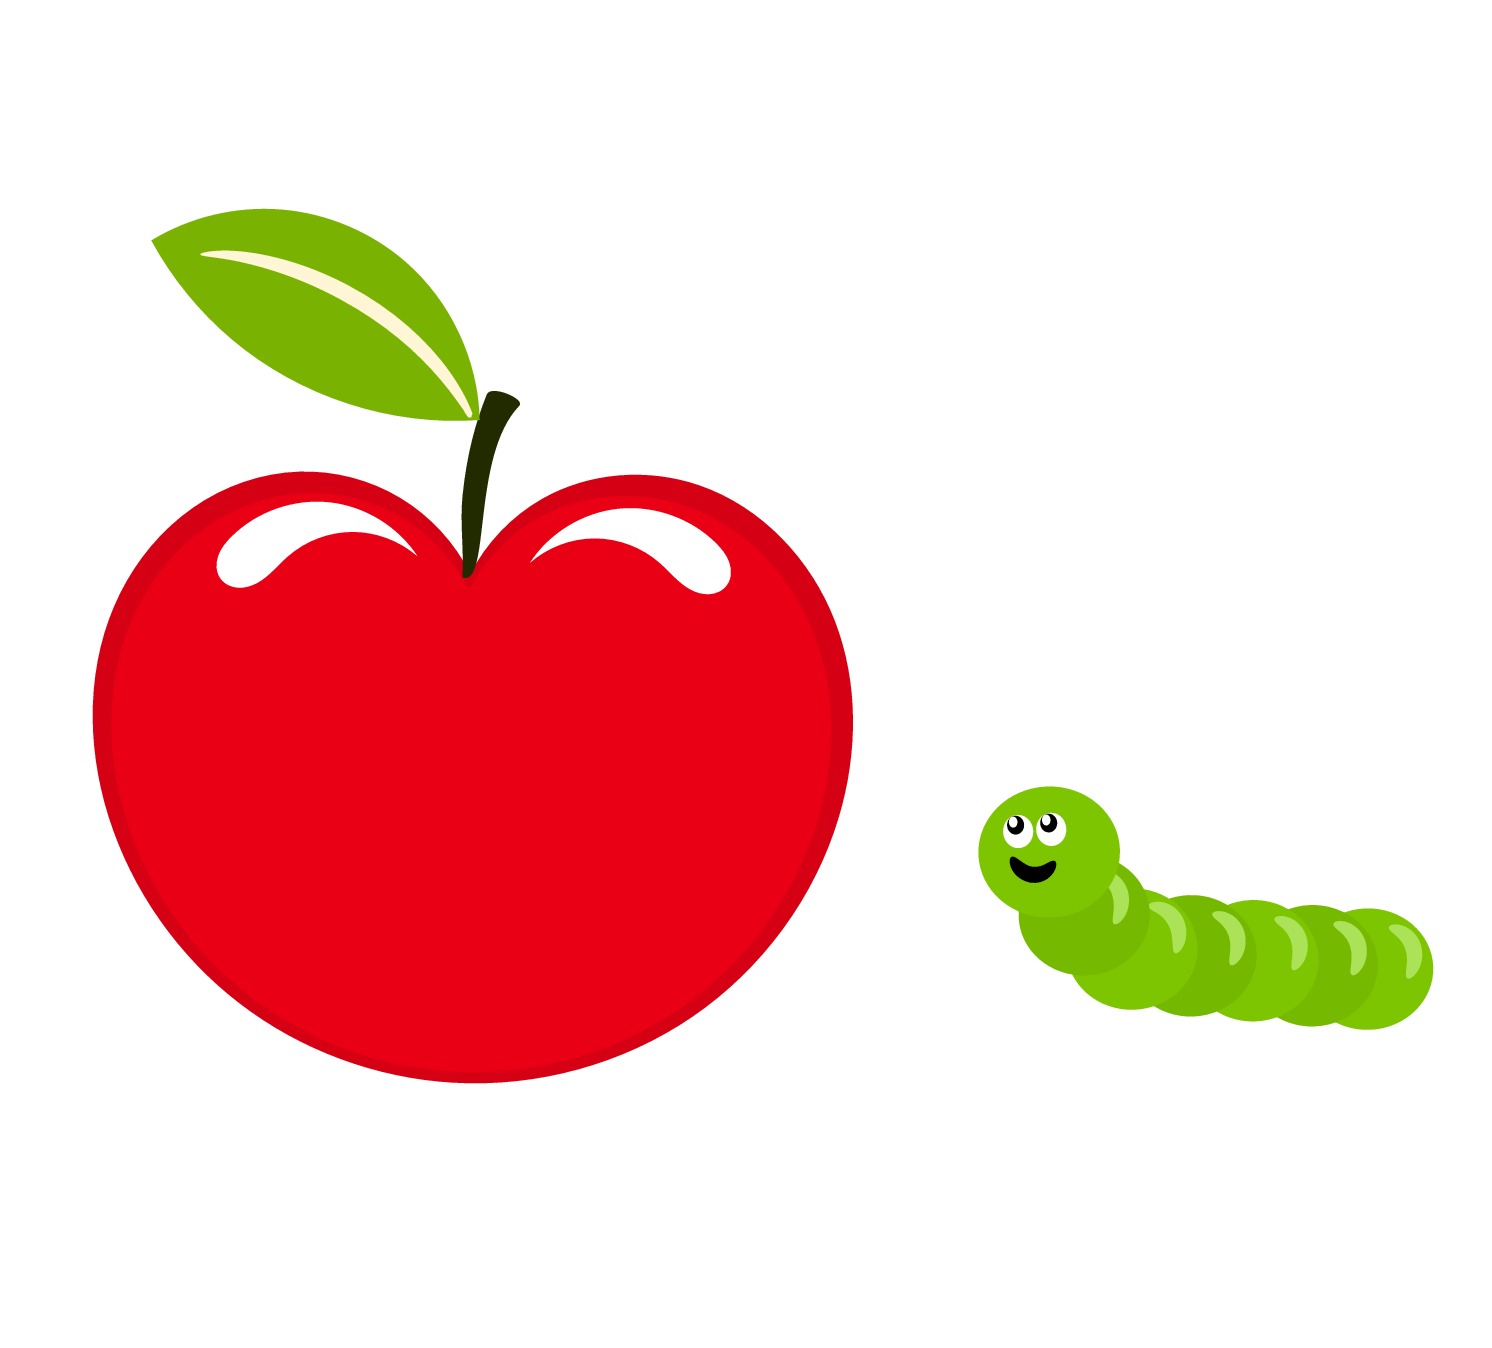 Caterpillar eating apple